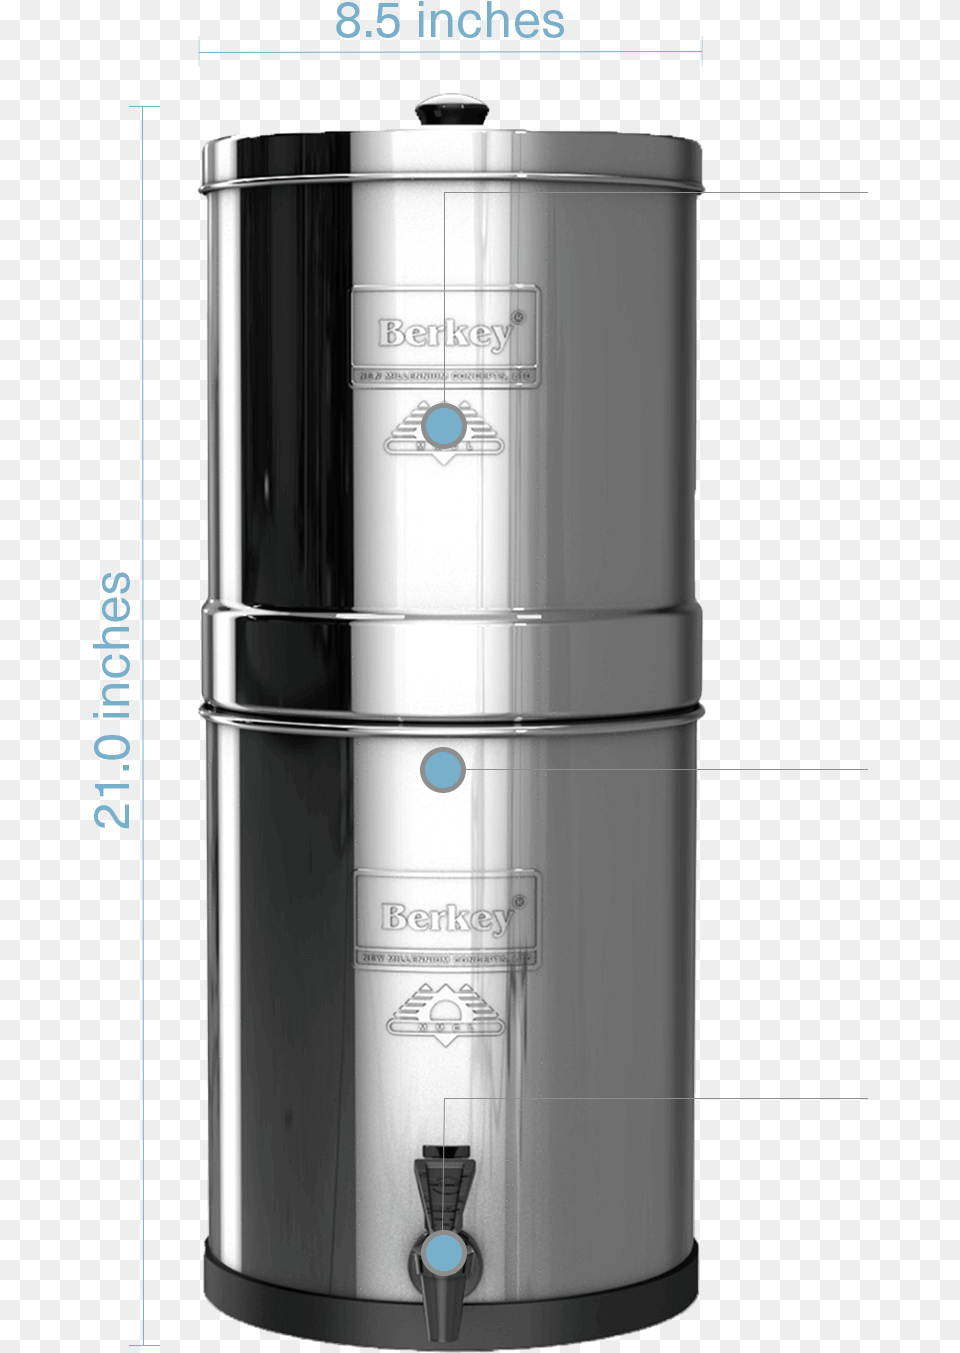 Big Berkey Water Filter Small Appliance, Bottle, Shaker, Device Free Png